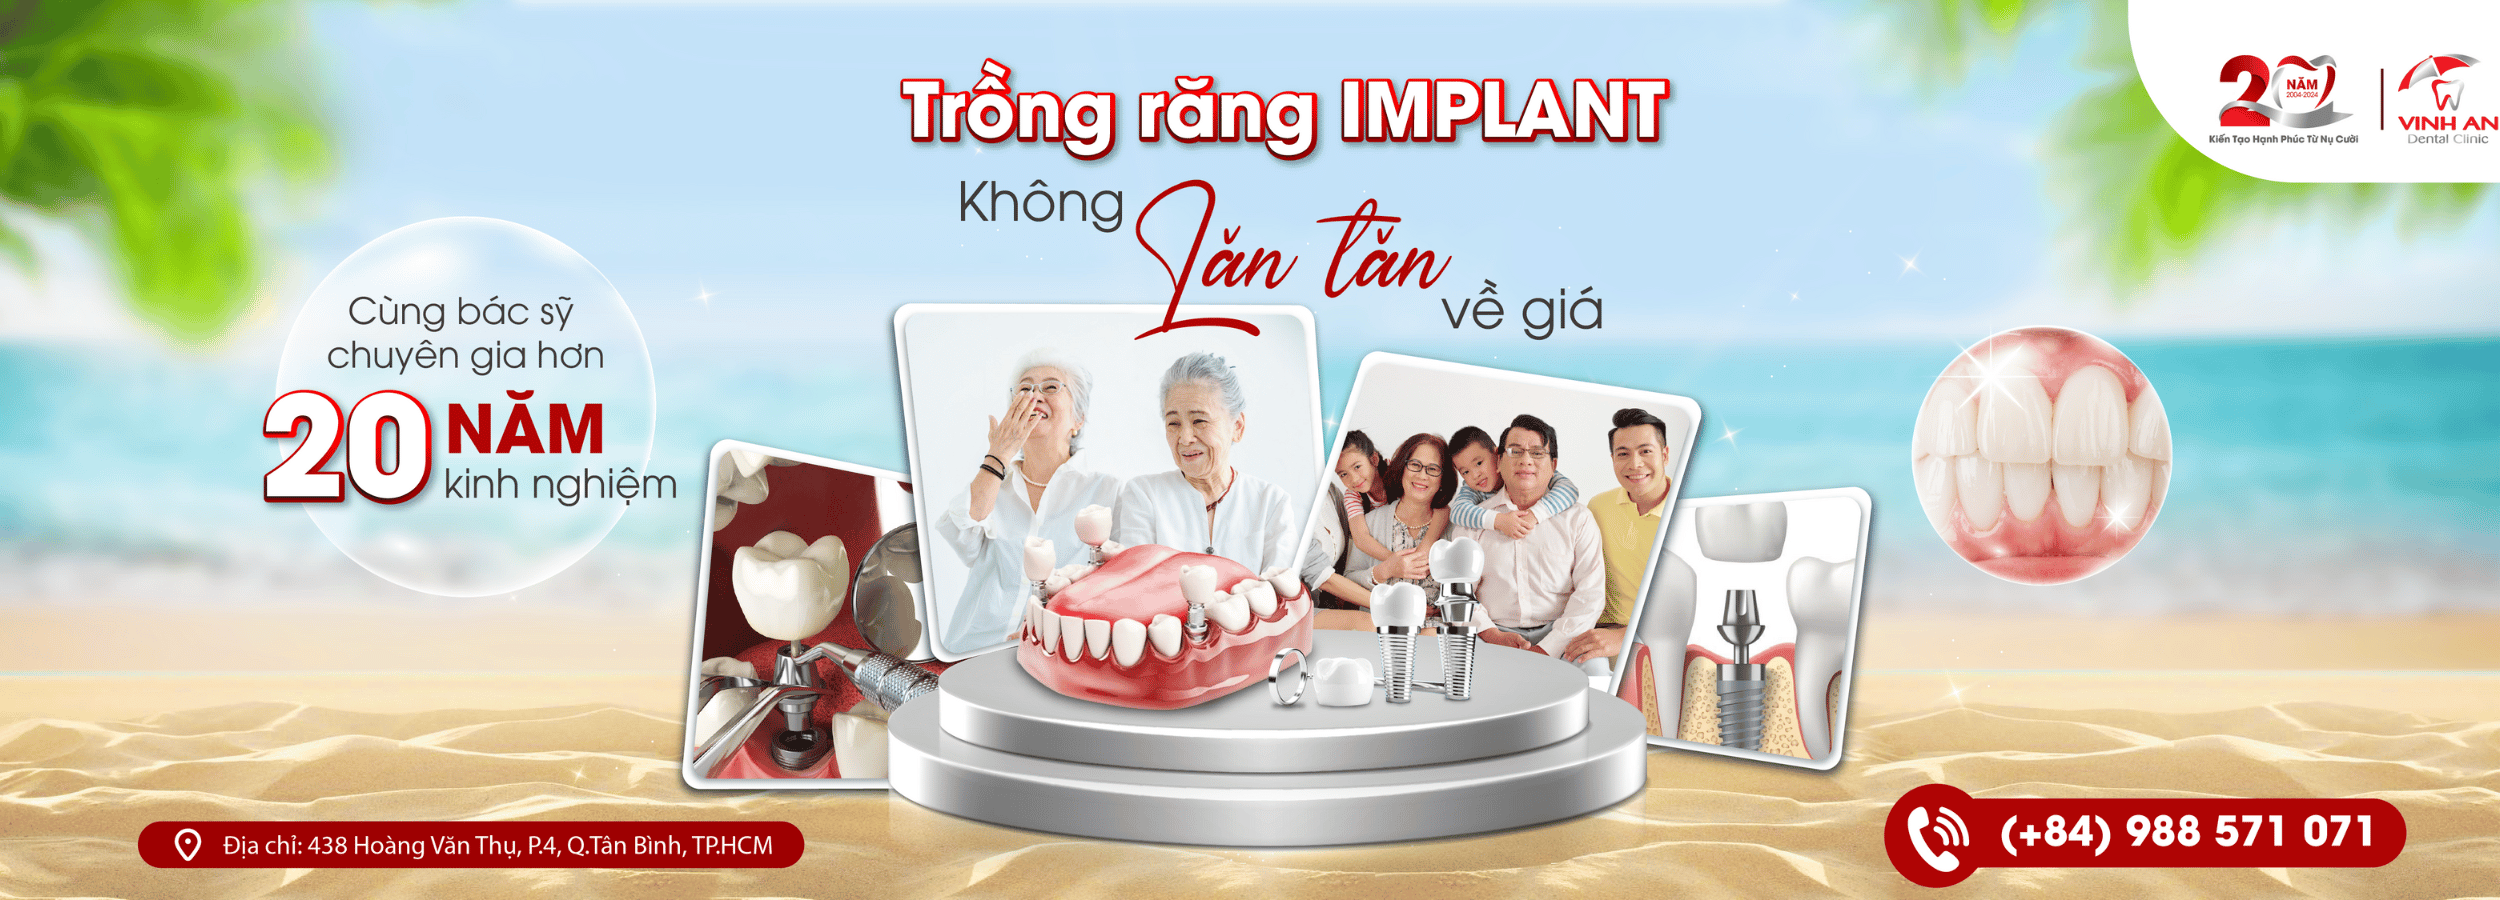 Implant-banner